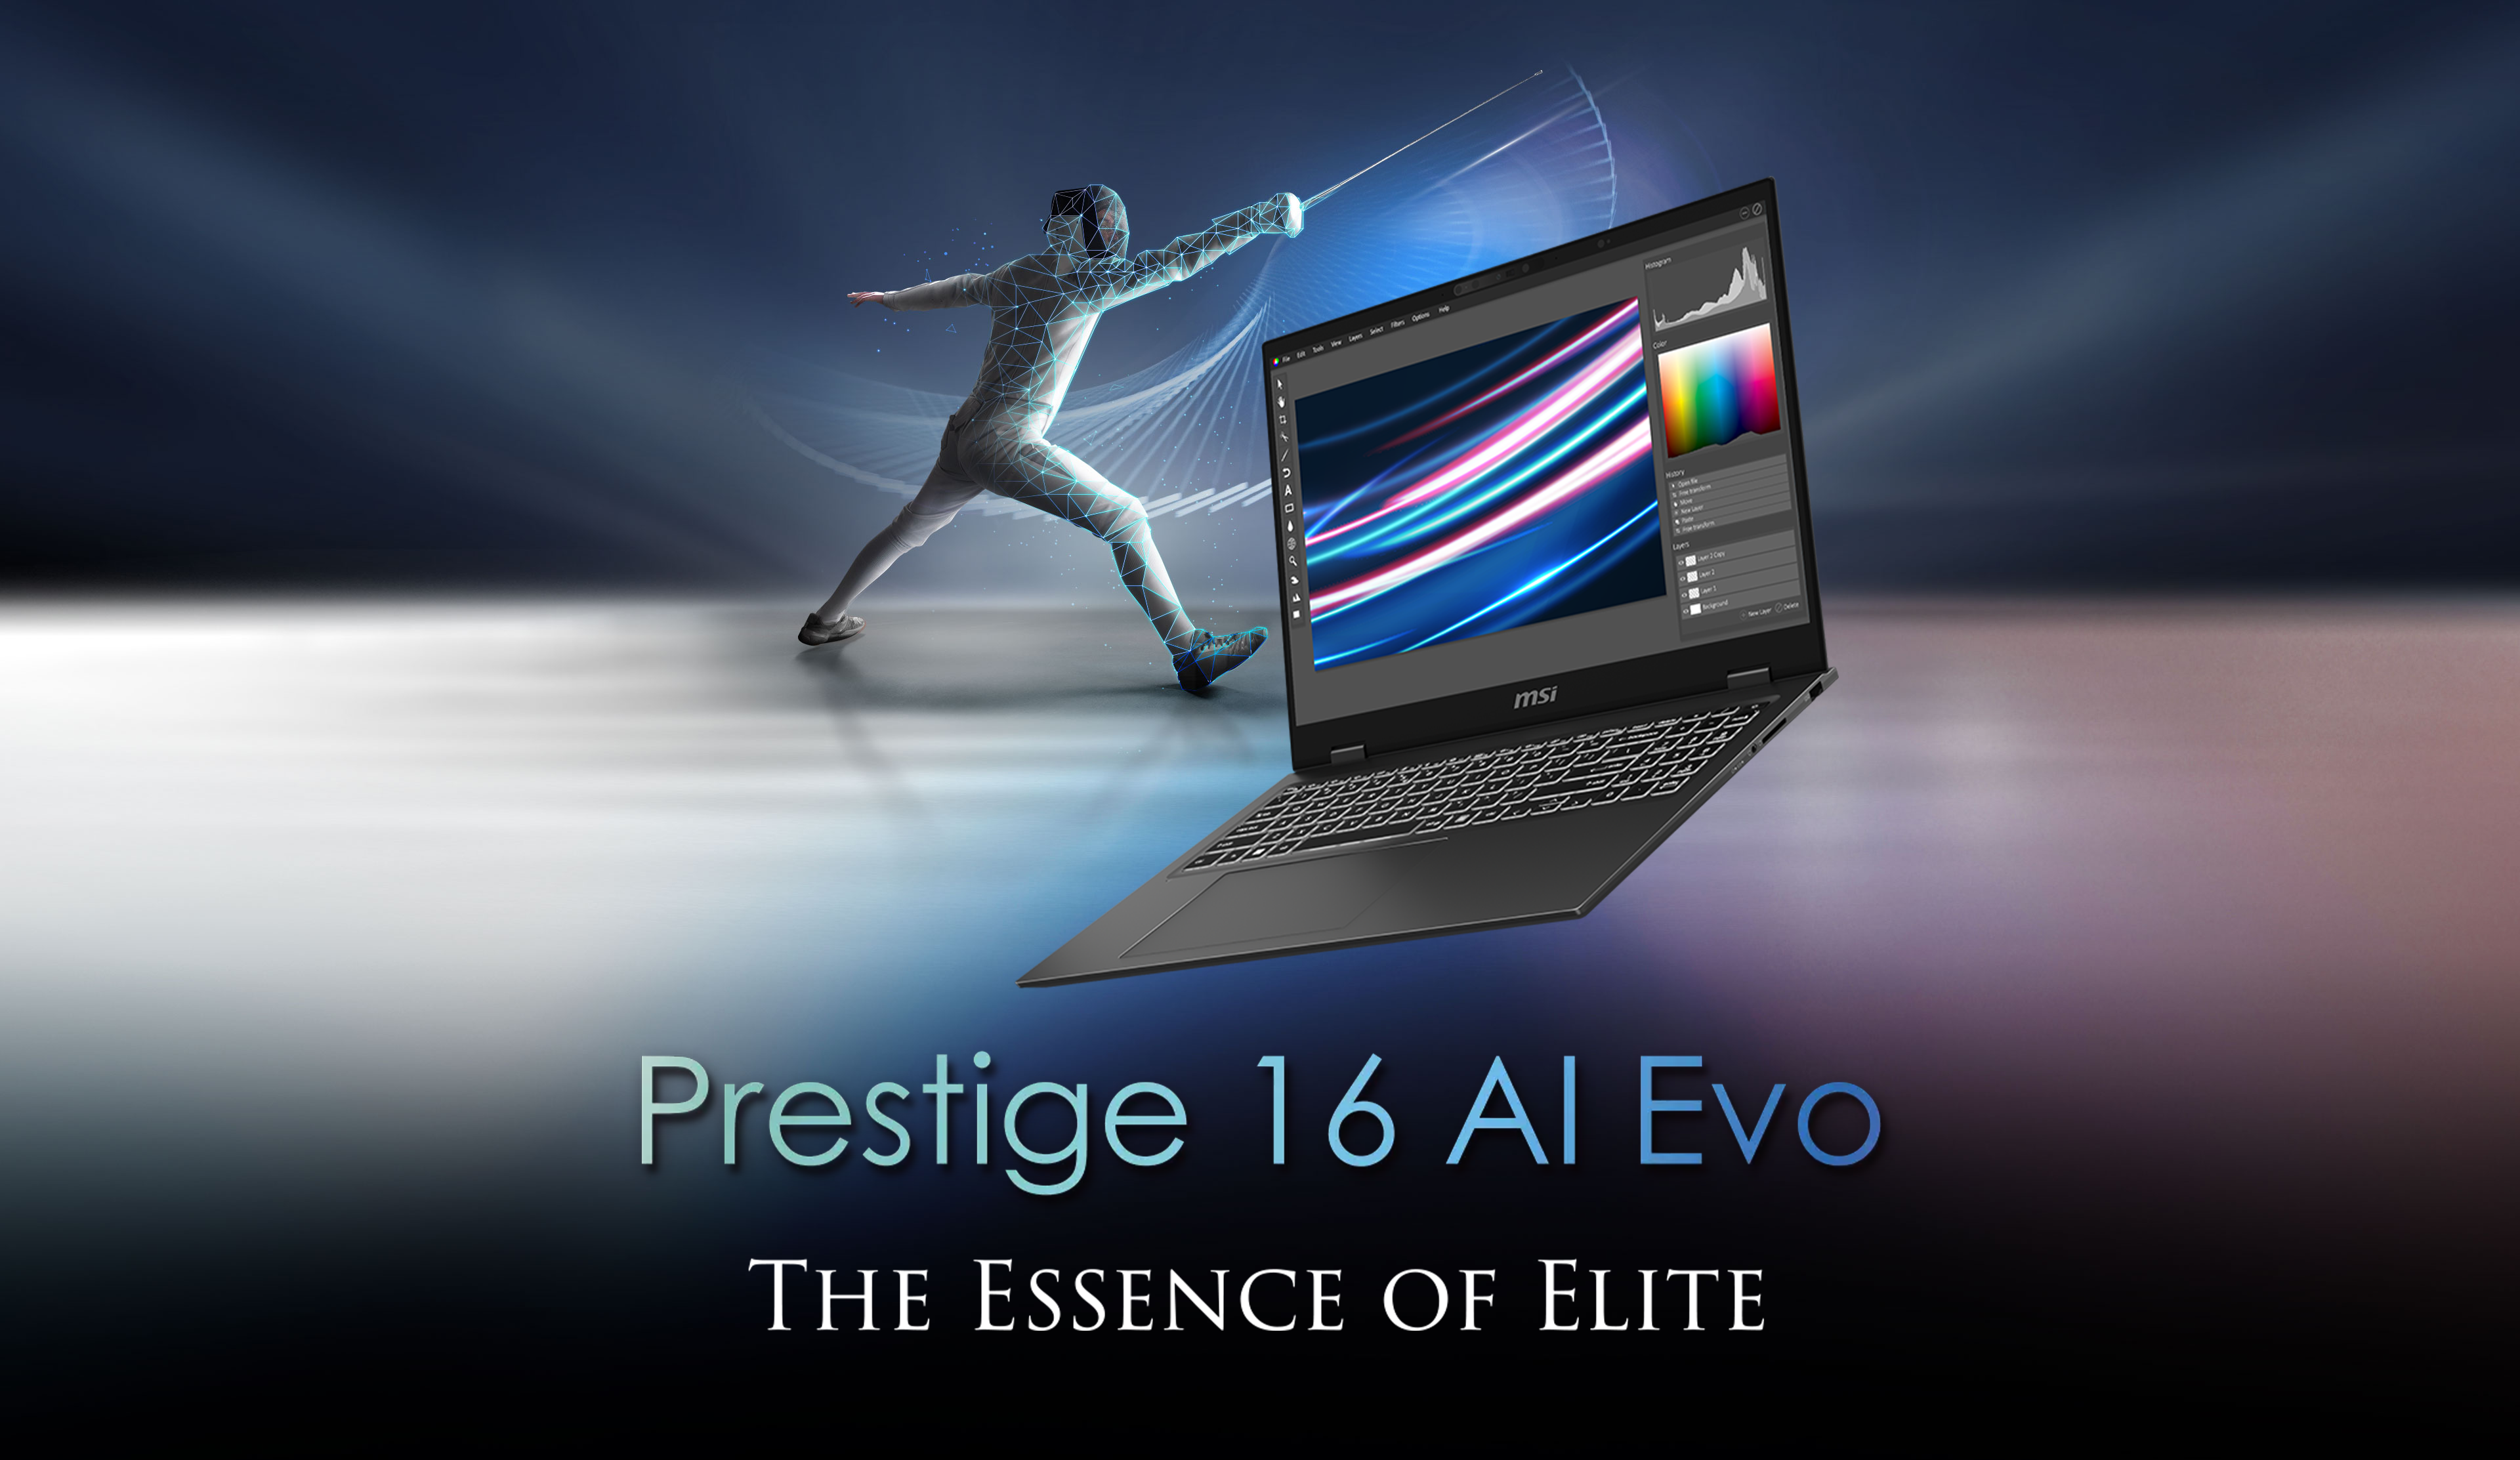 Prestige 16 AI Evo